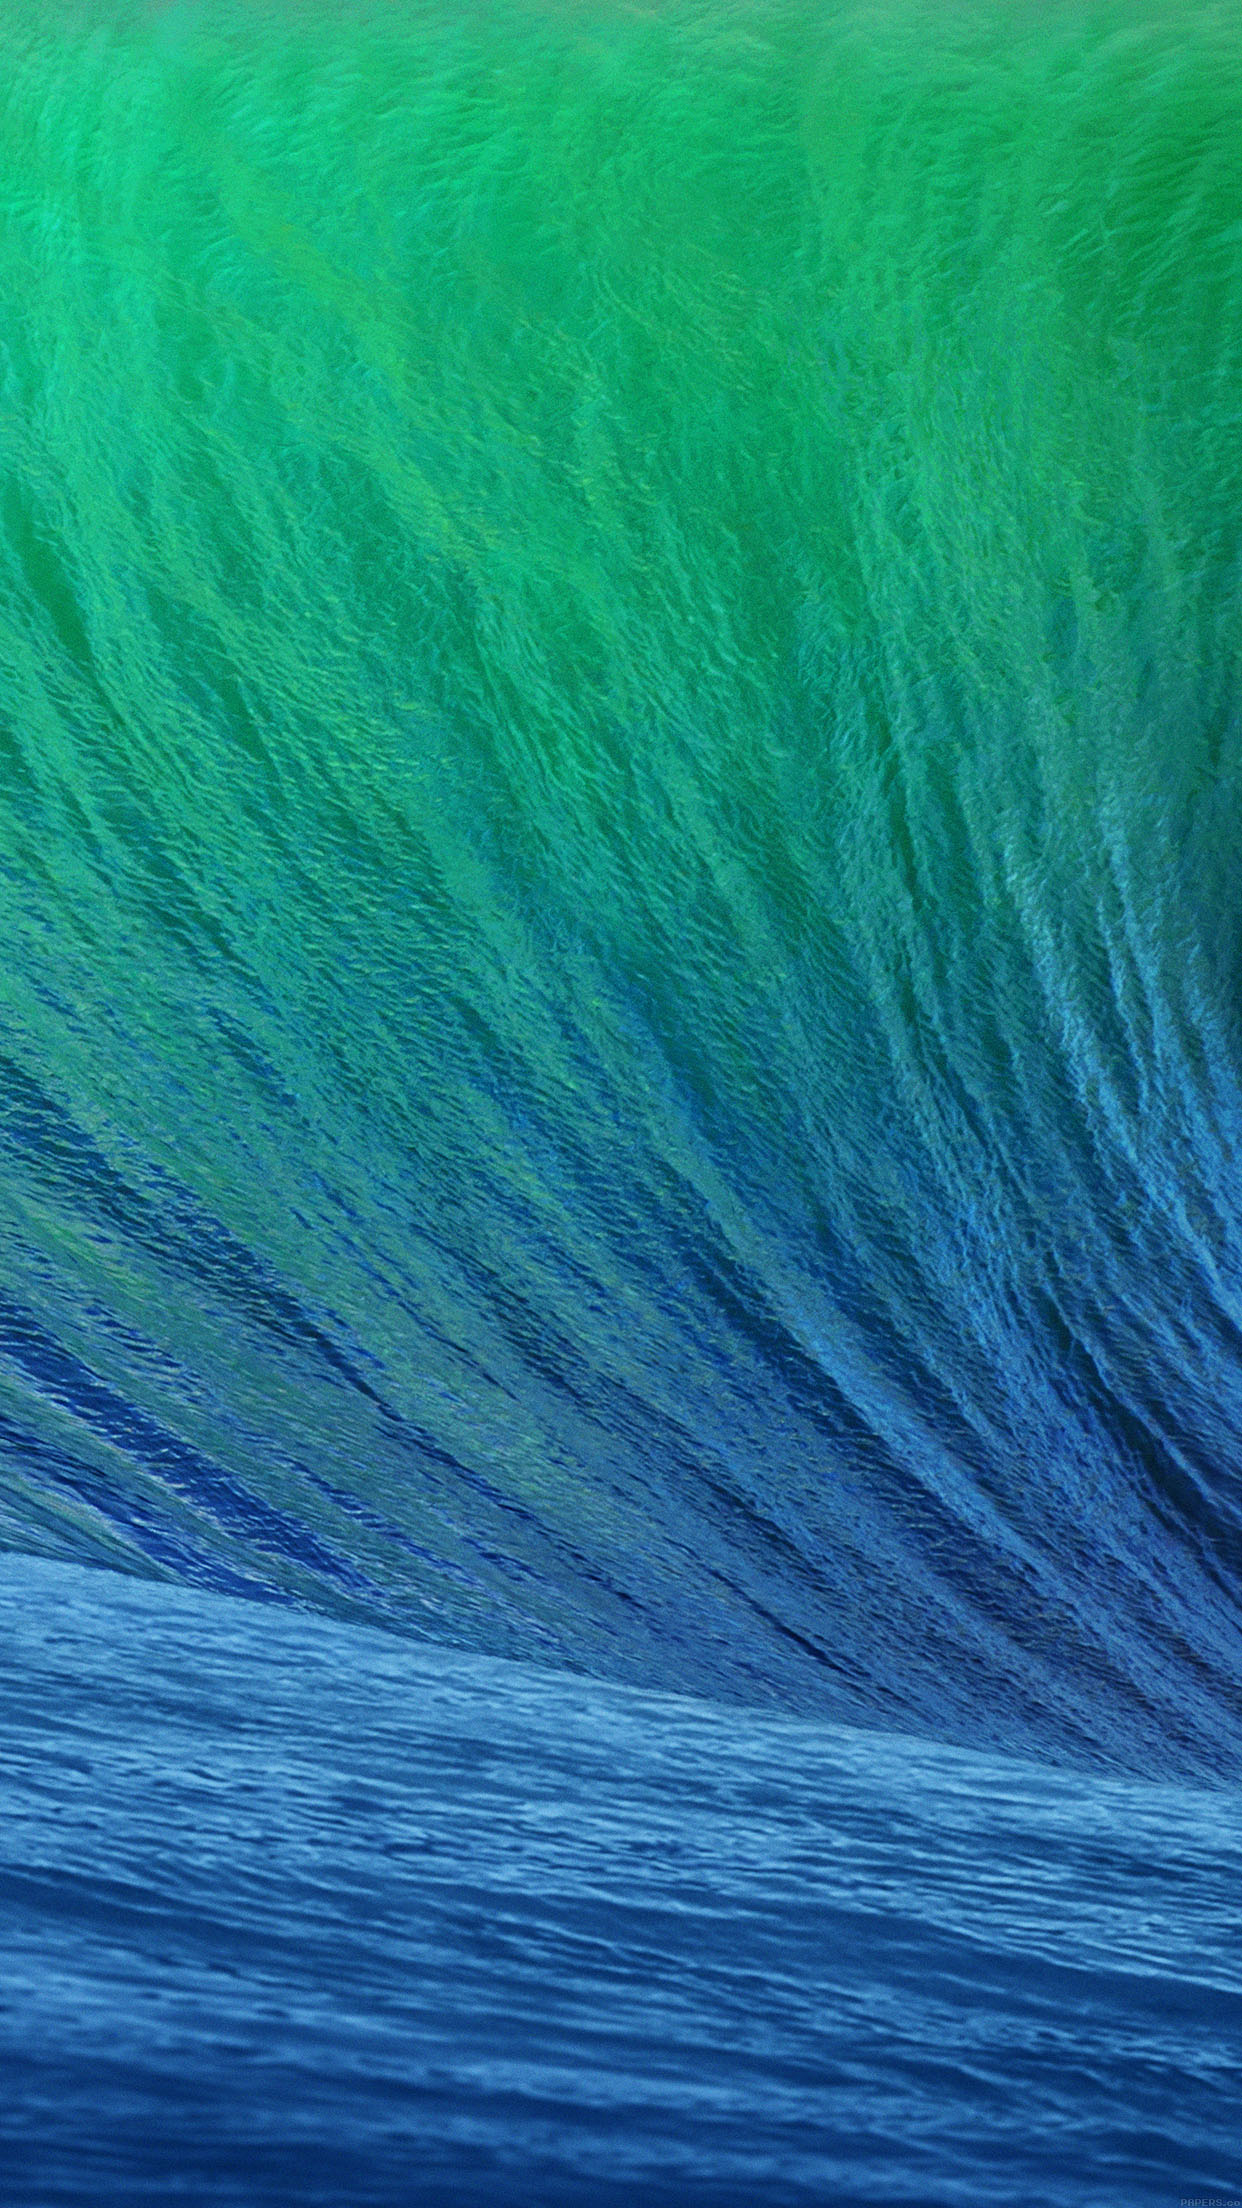 Mac Os X Mavericks Wallpaper Iphone - HD Wallpaper 